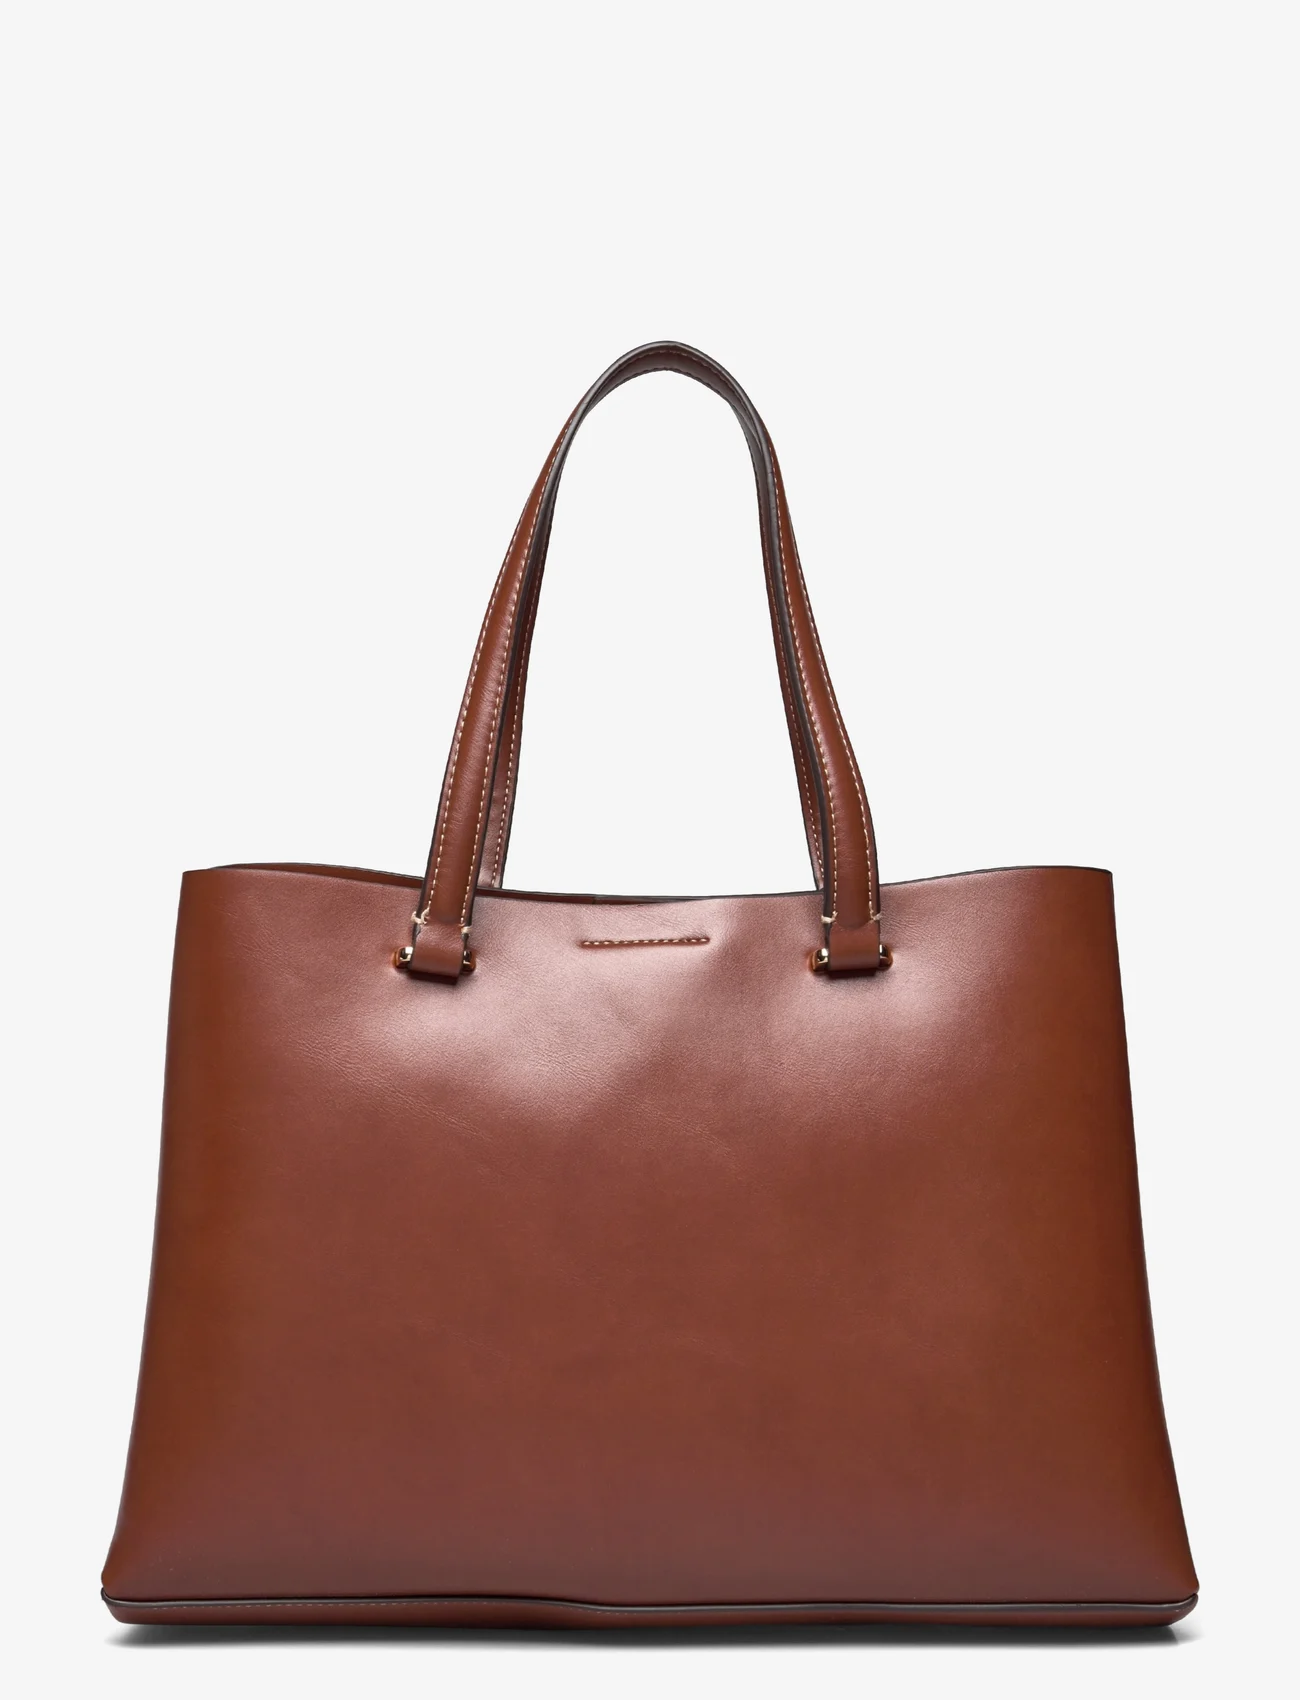 Mango - Shopper bag with dual compartment - shoppere - medium brown - 1